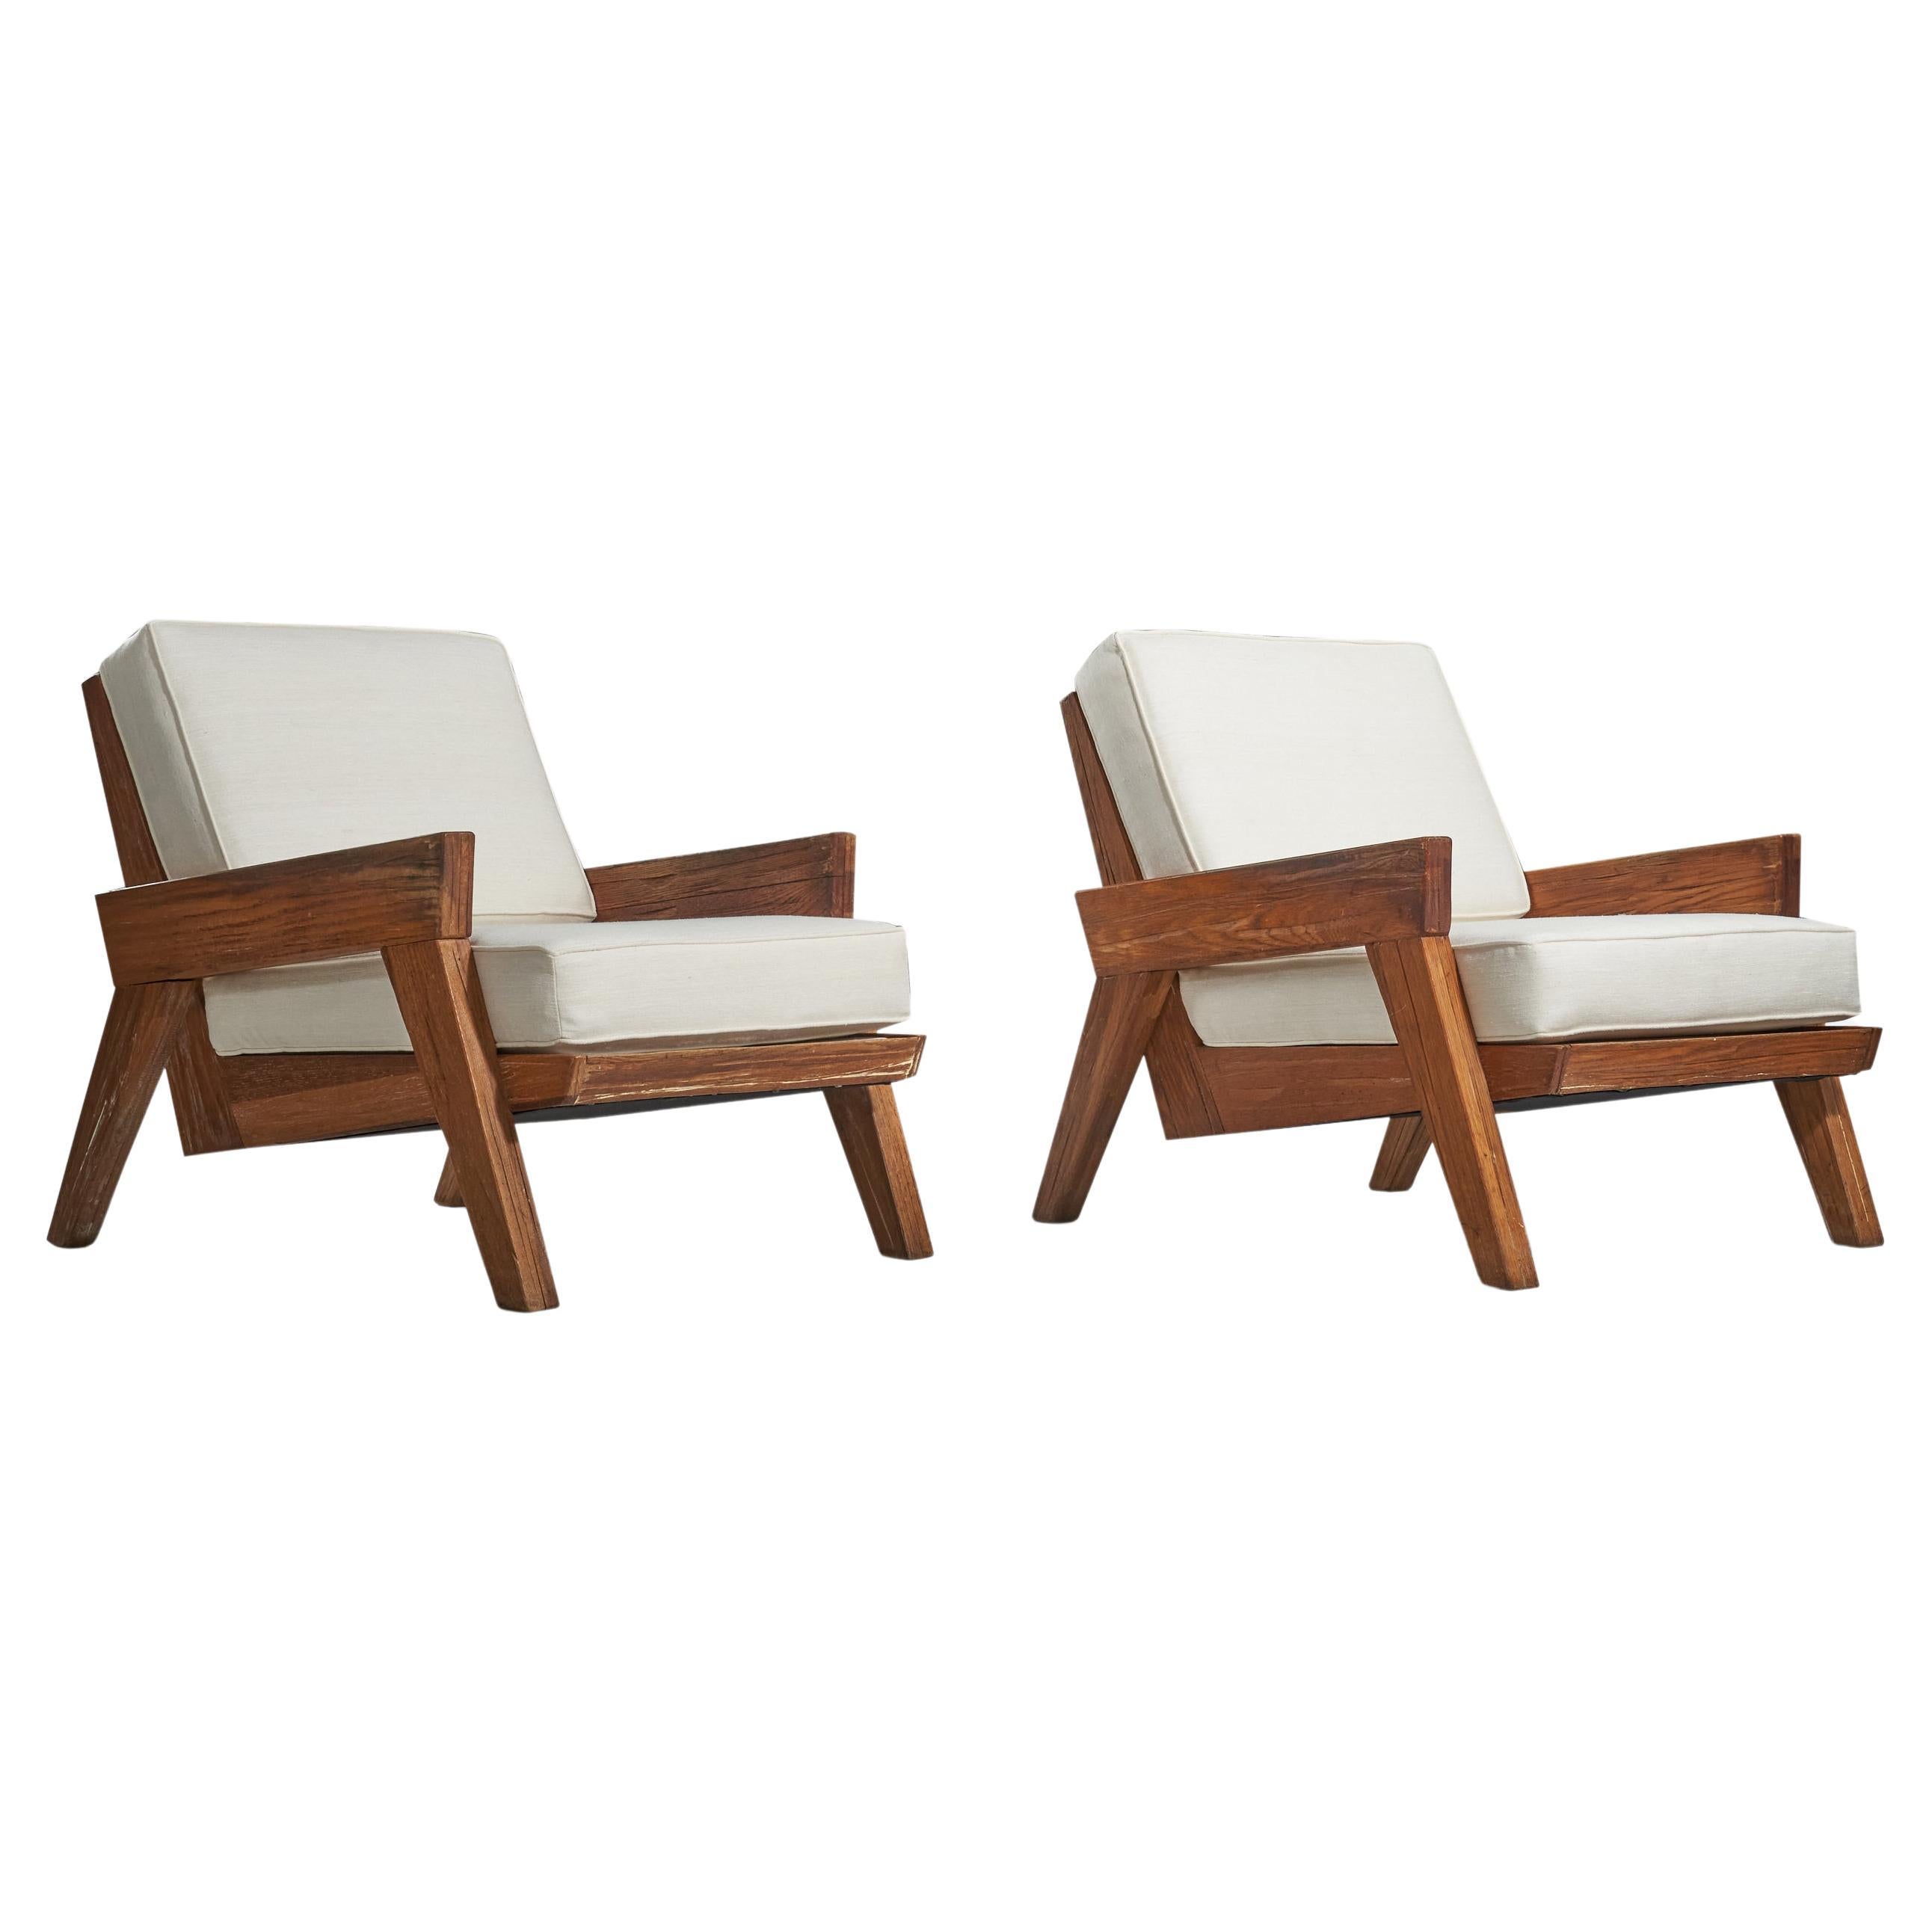 A. Brandt Company Inc., "Ranch Oak" Lounge Chairs, Oak, Fabric, USA, c. 1950s